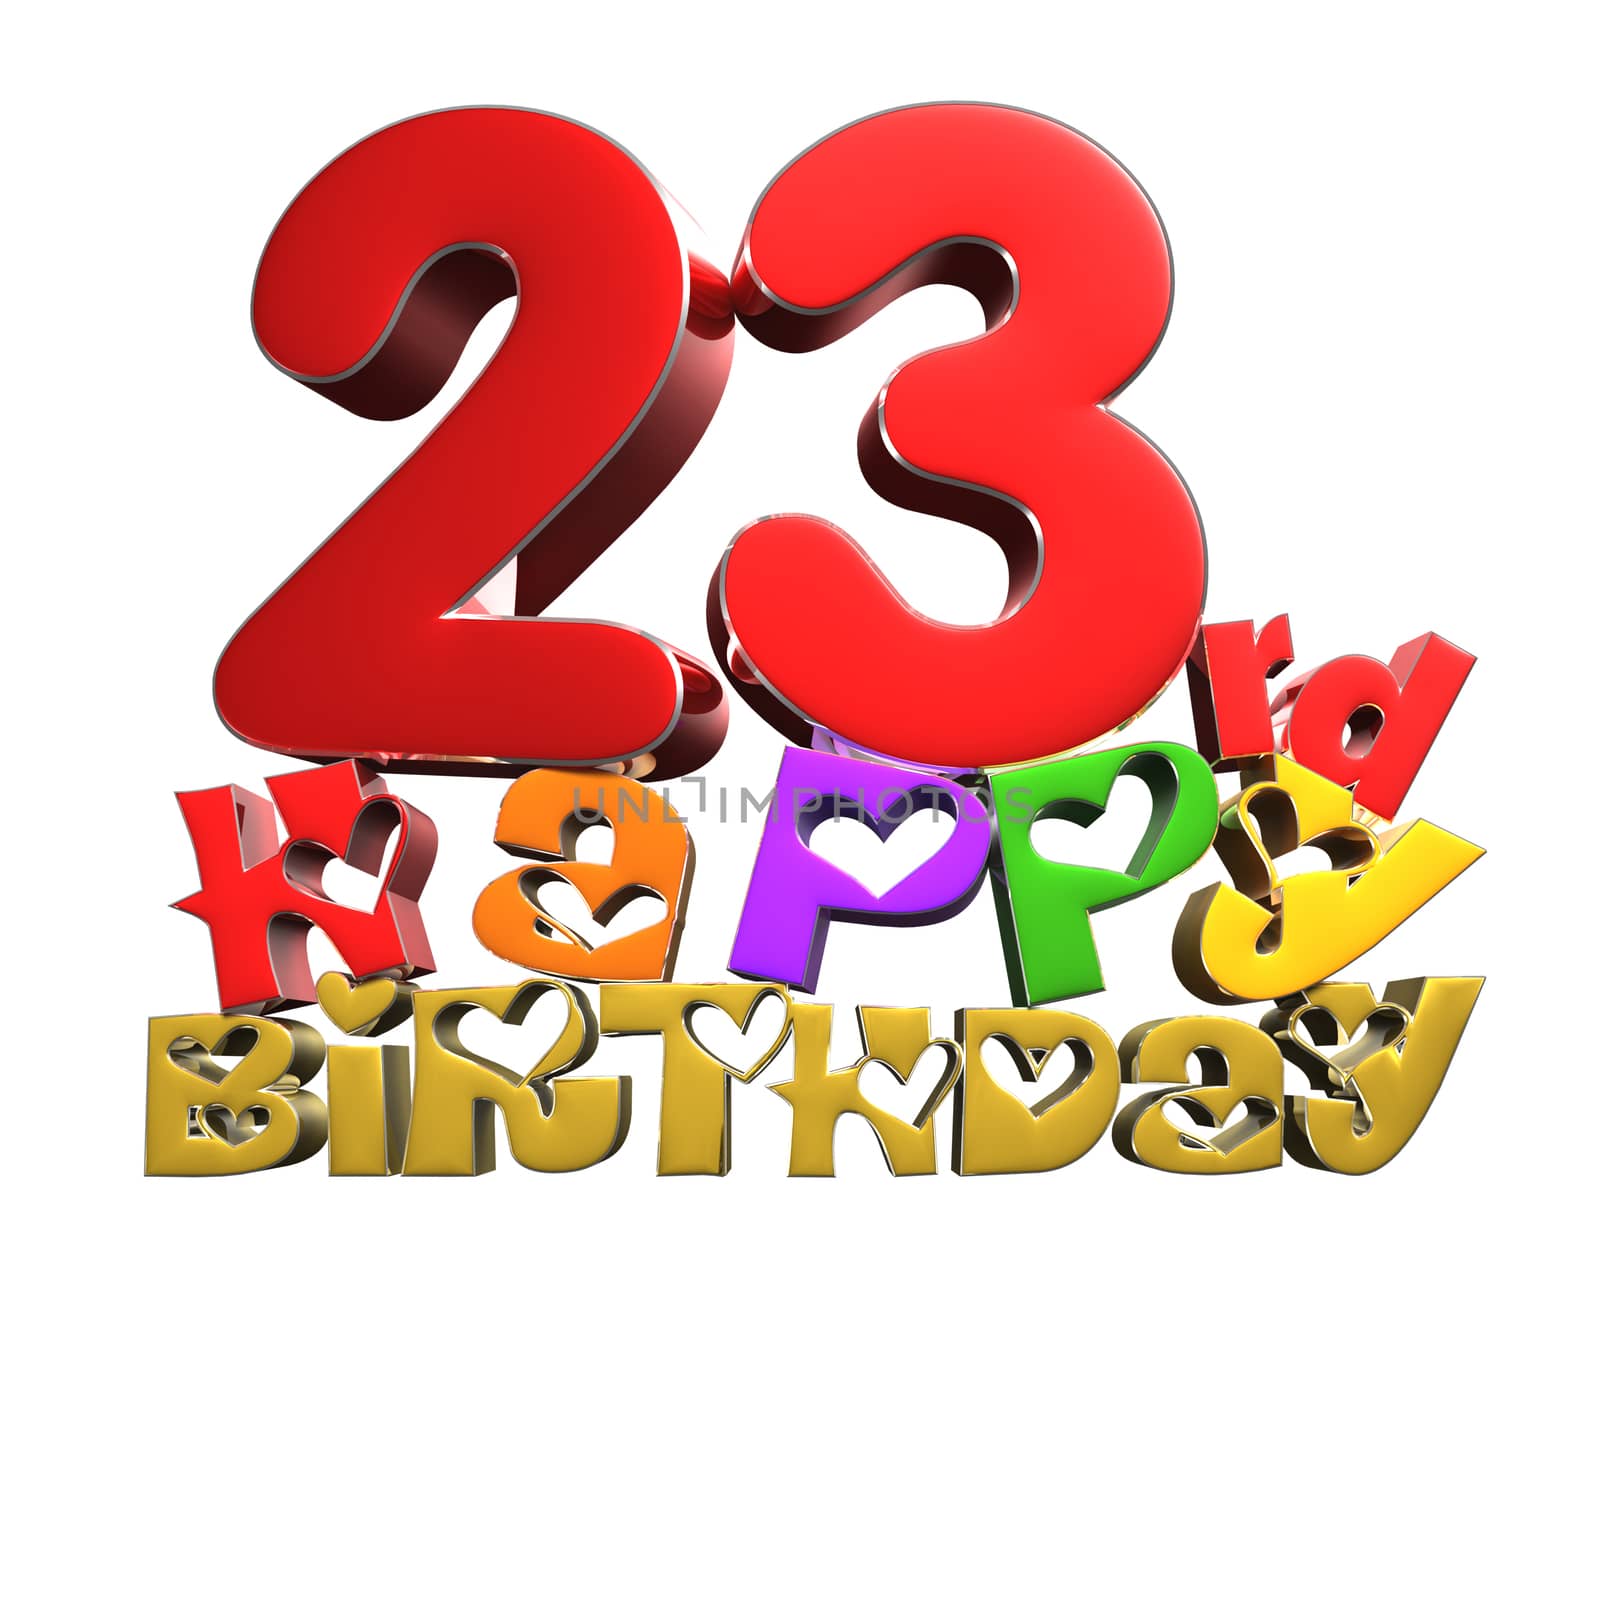 23 rd Happy Birthday 3d. by thitimontoyai